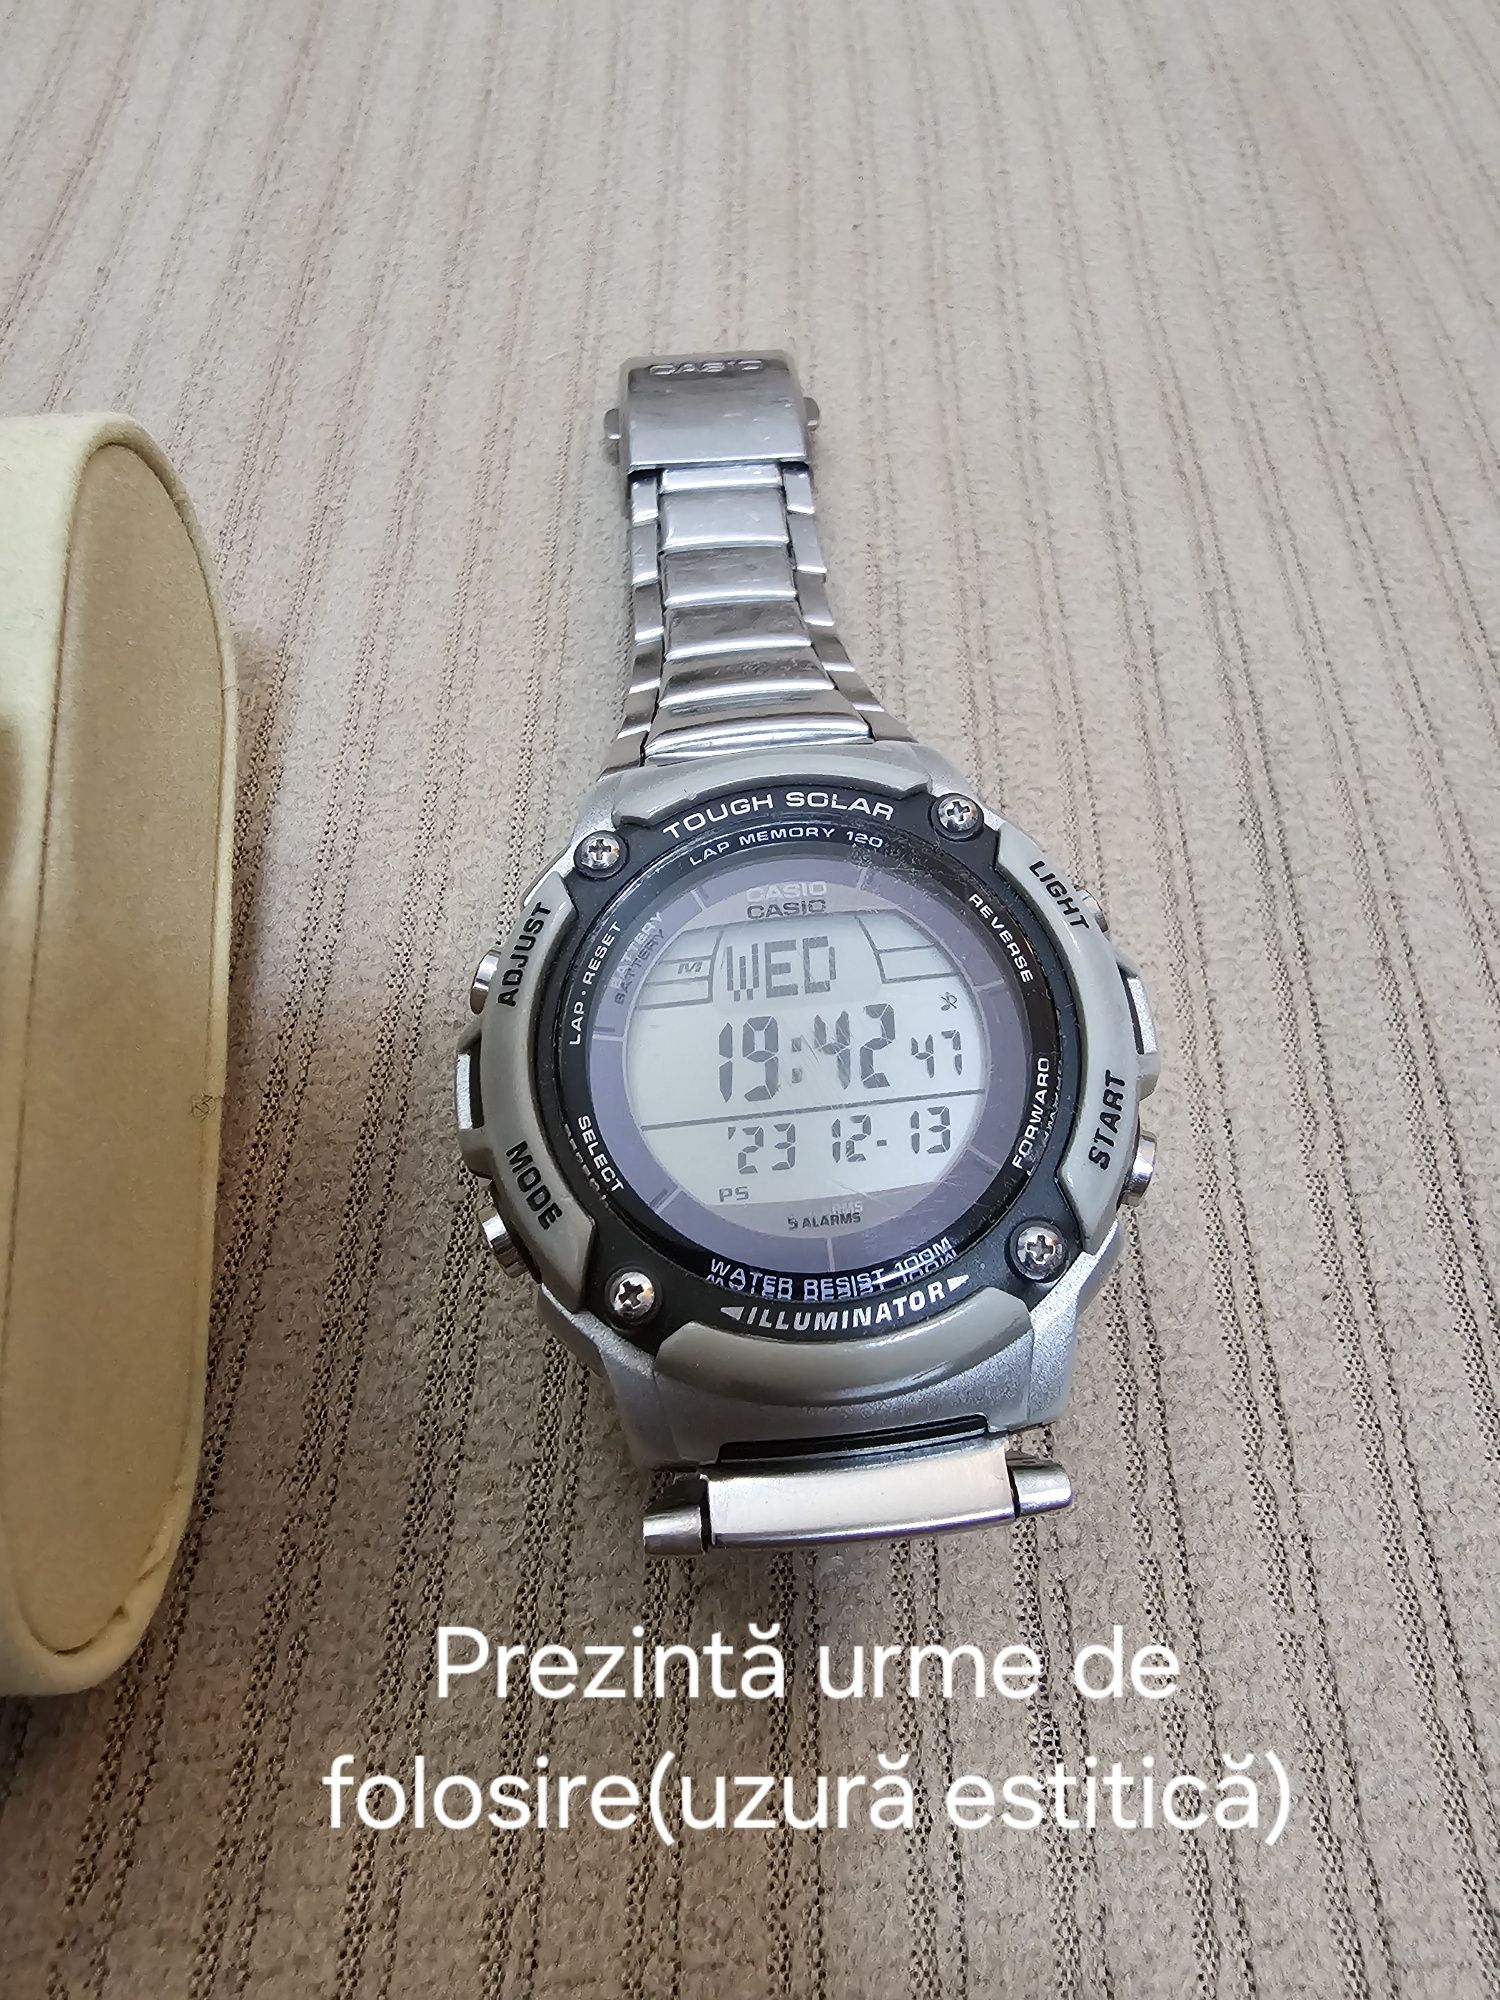 Vând ceasuri (colecție personala) Casio, Fossil, Diesel, Huawei